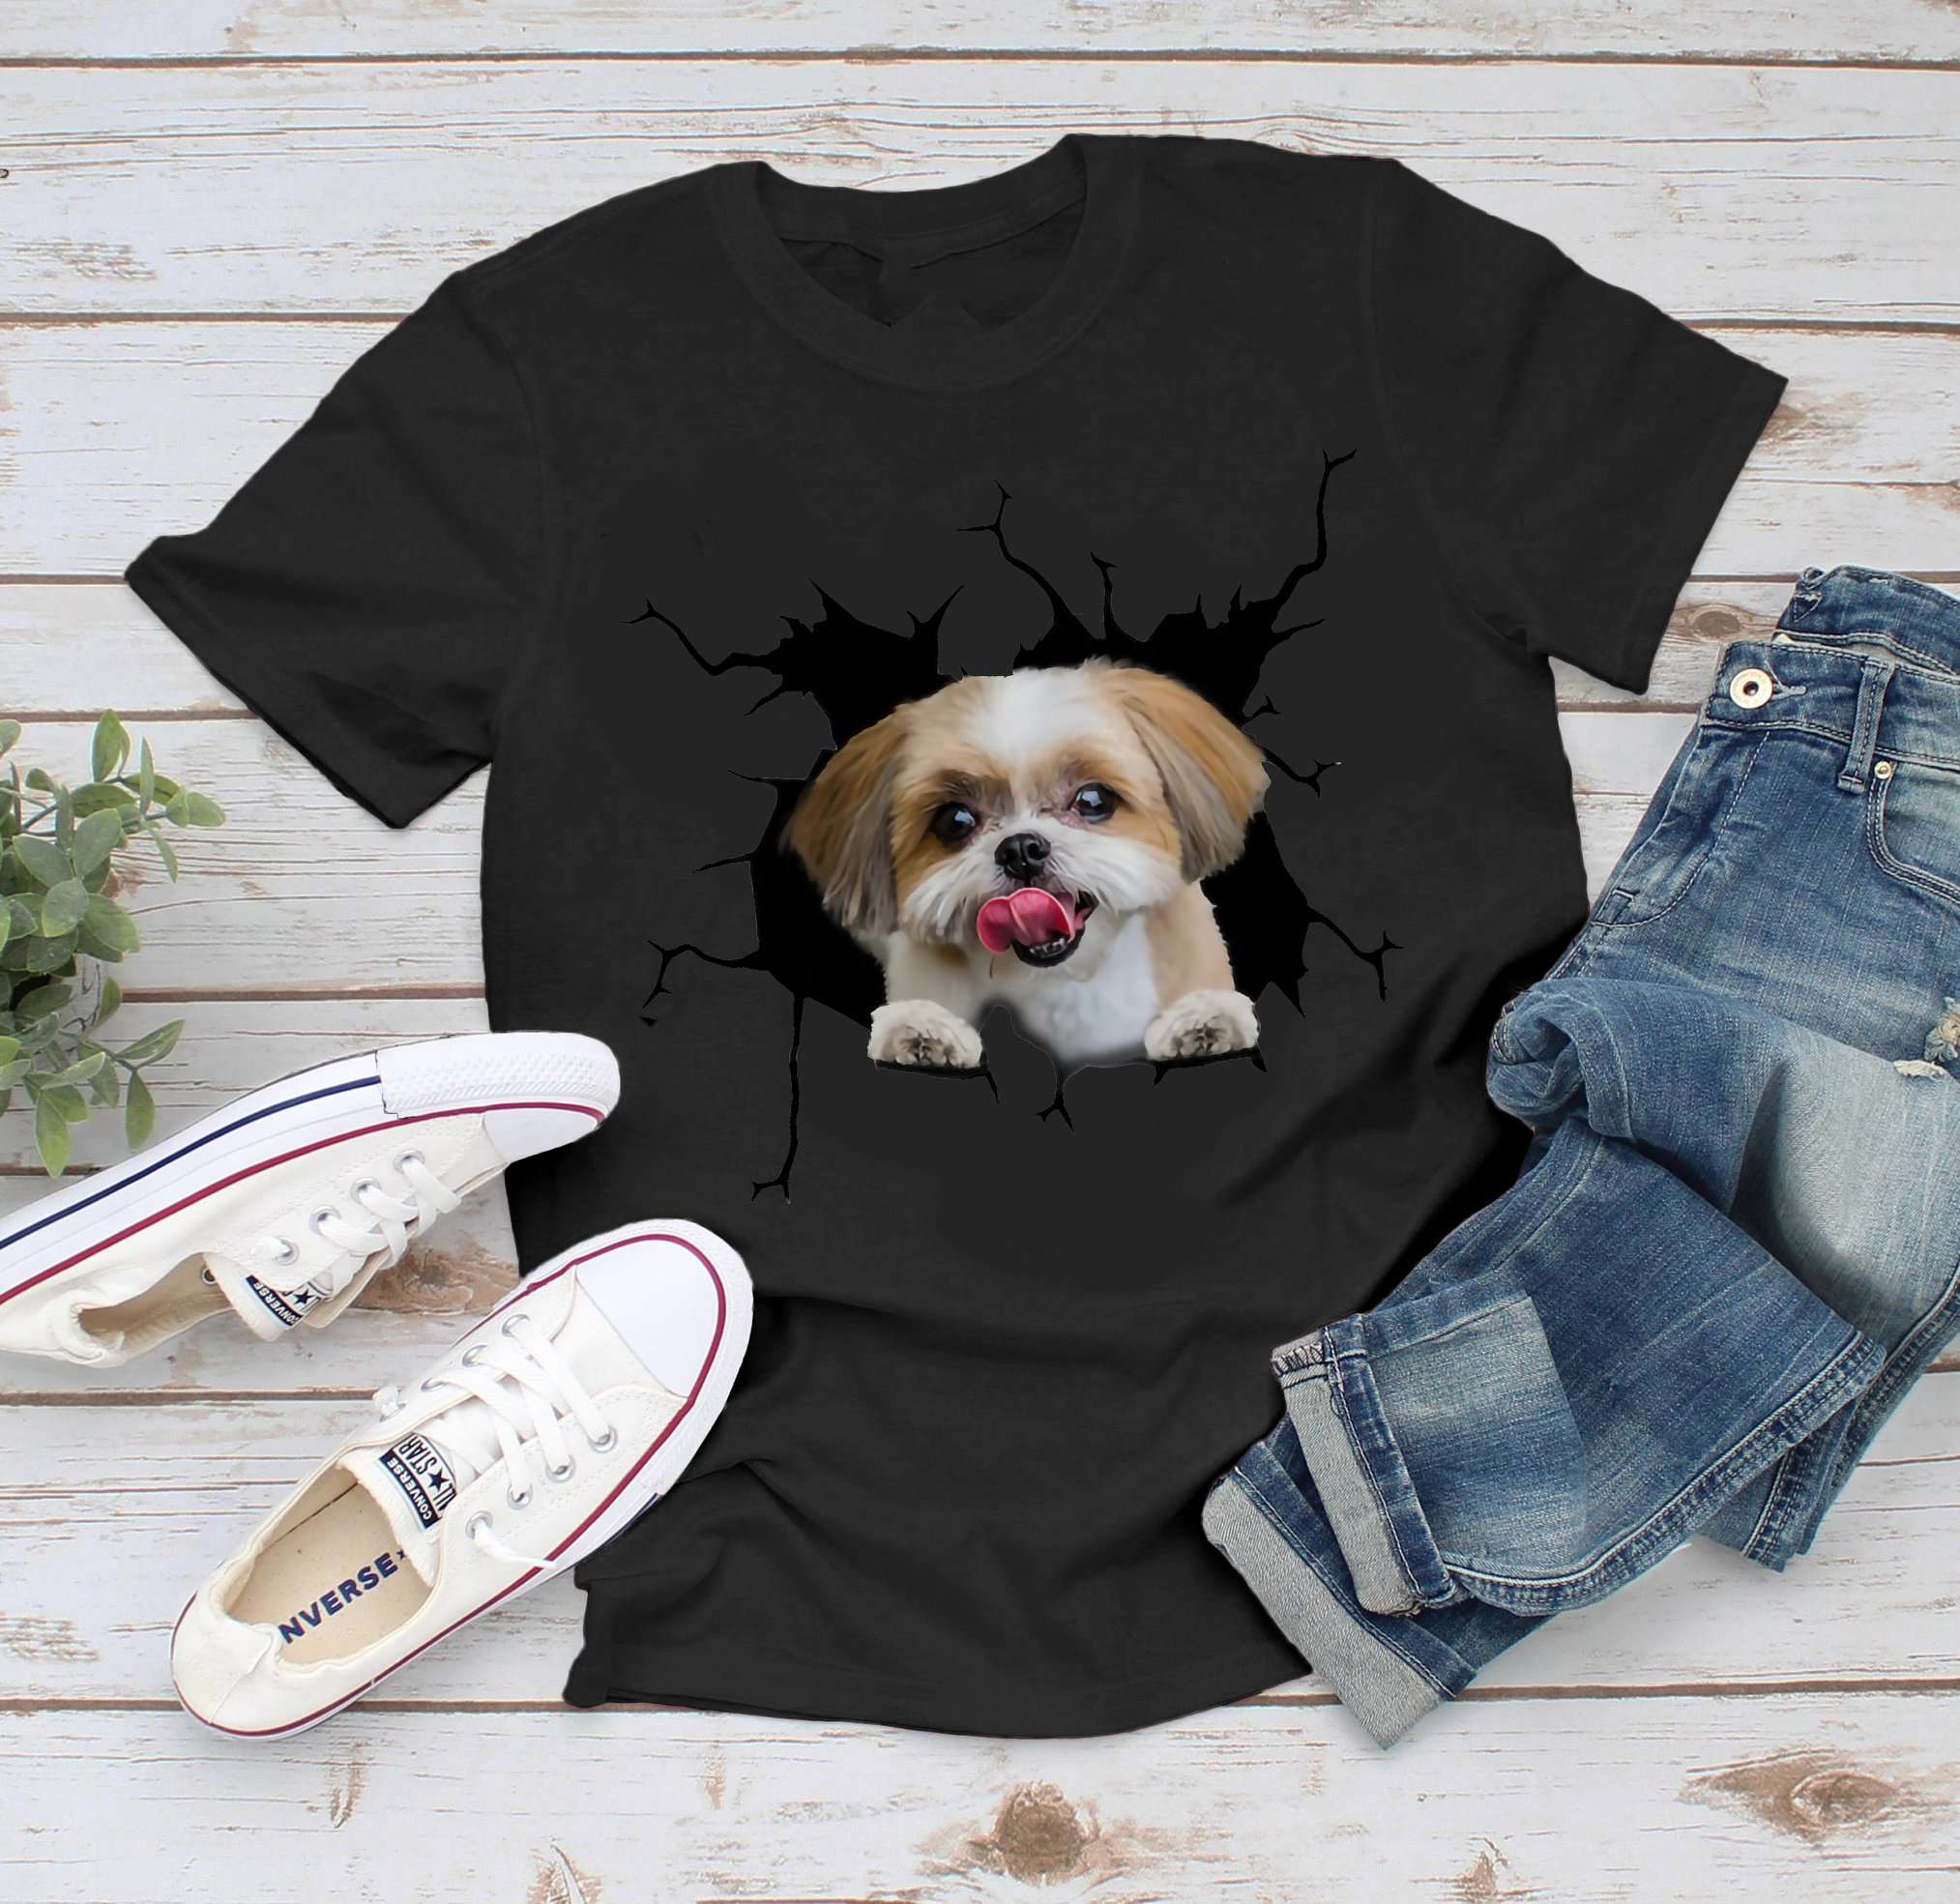 Personalized Dog Shirts for Humans Custom Dog T-shirts Sweatshirt Irish Green 3XL